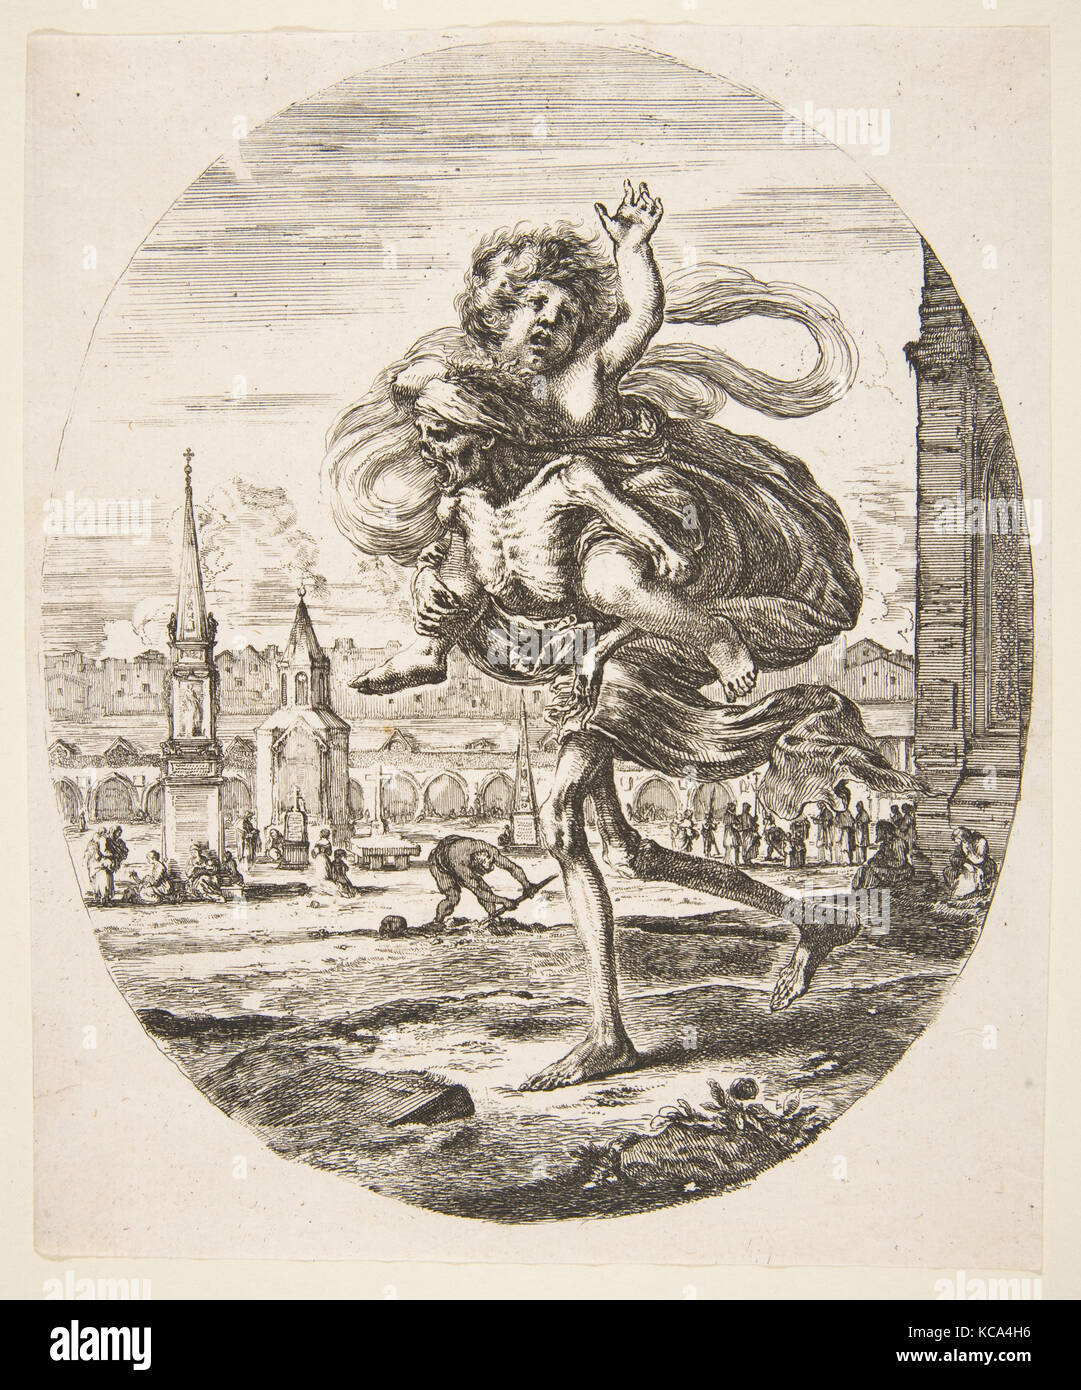 La mort portant un enfant, à partir de 'Les cinq décès' (Les cinq morts), ca. 1648 Banque D'Images